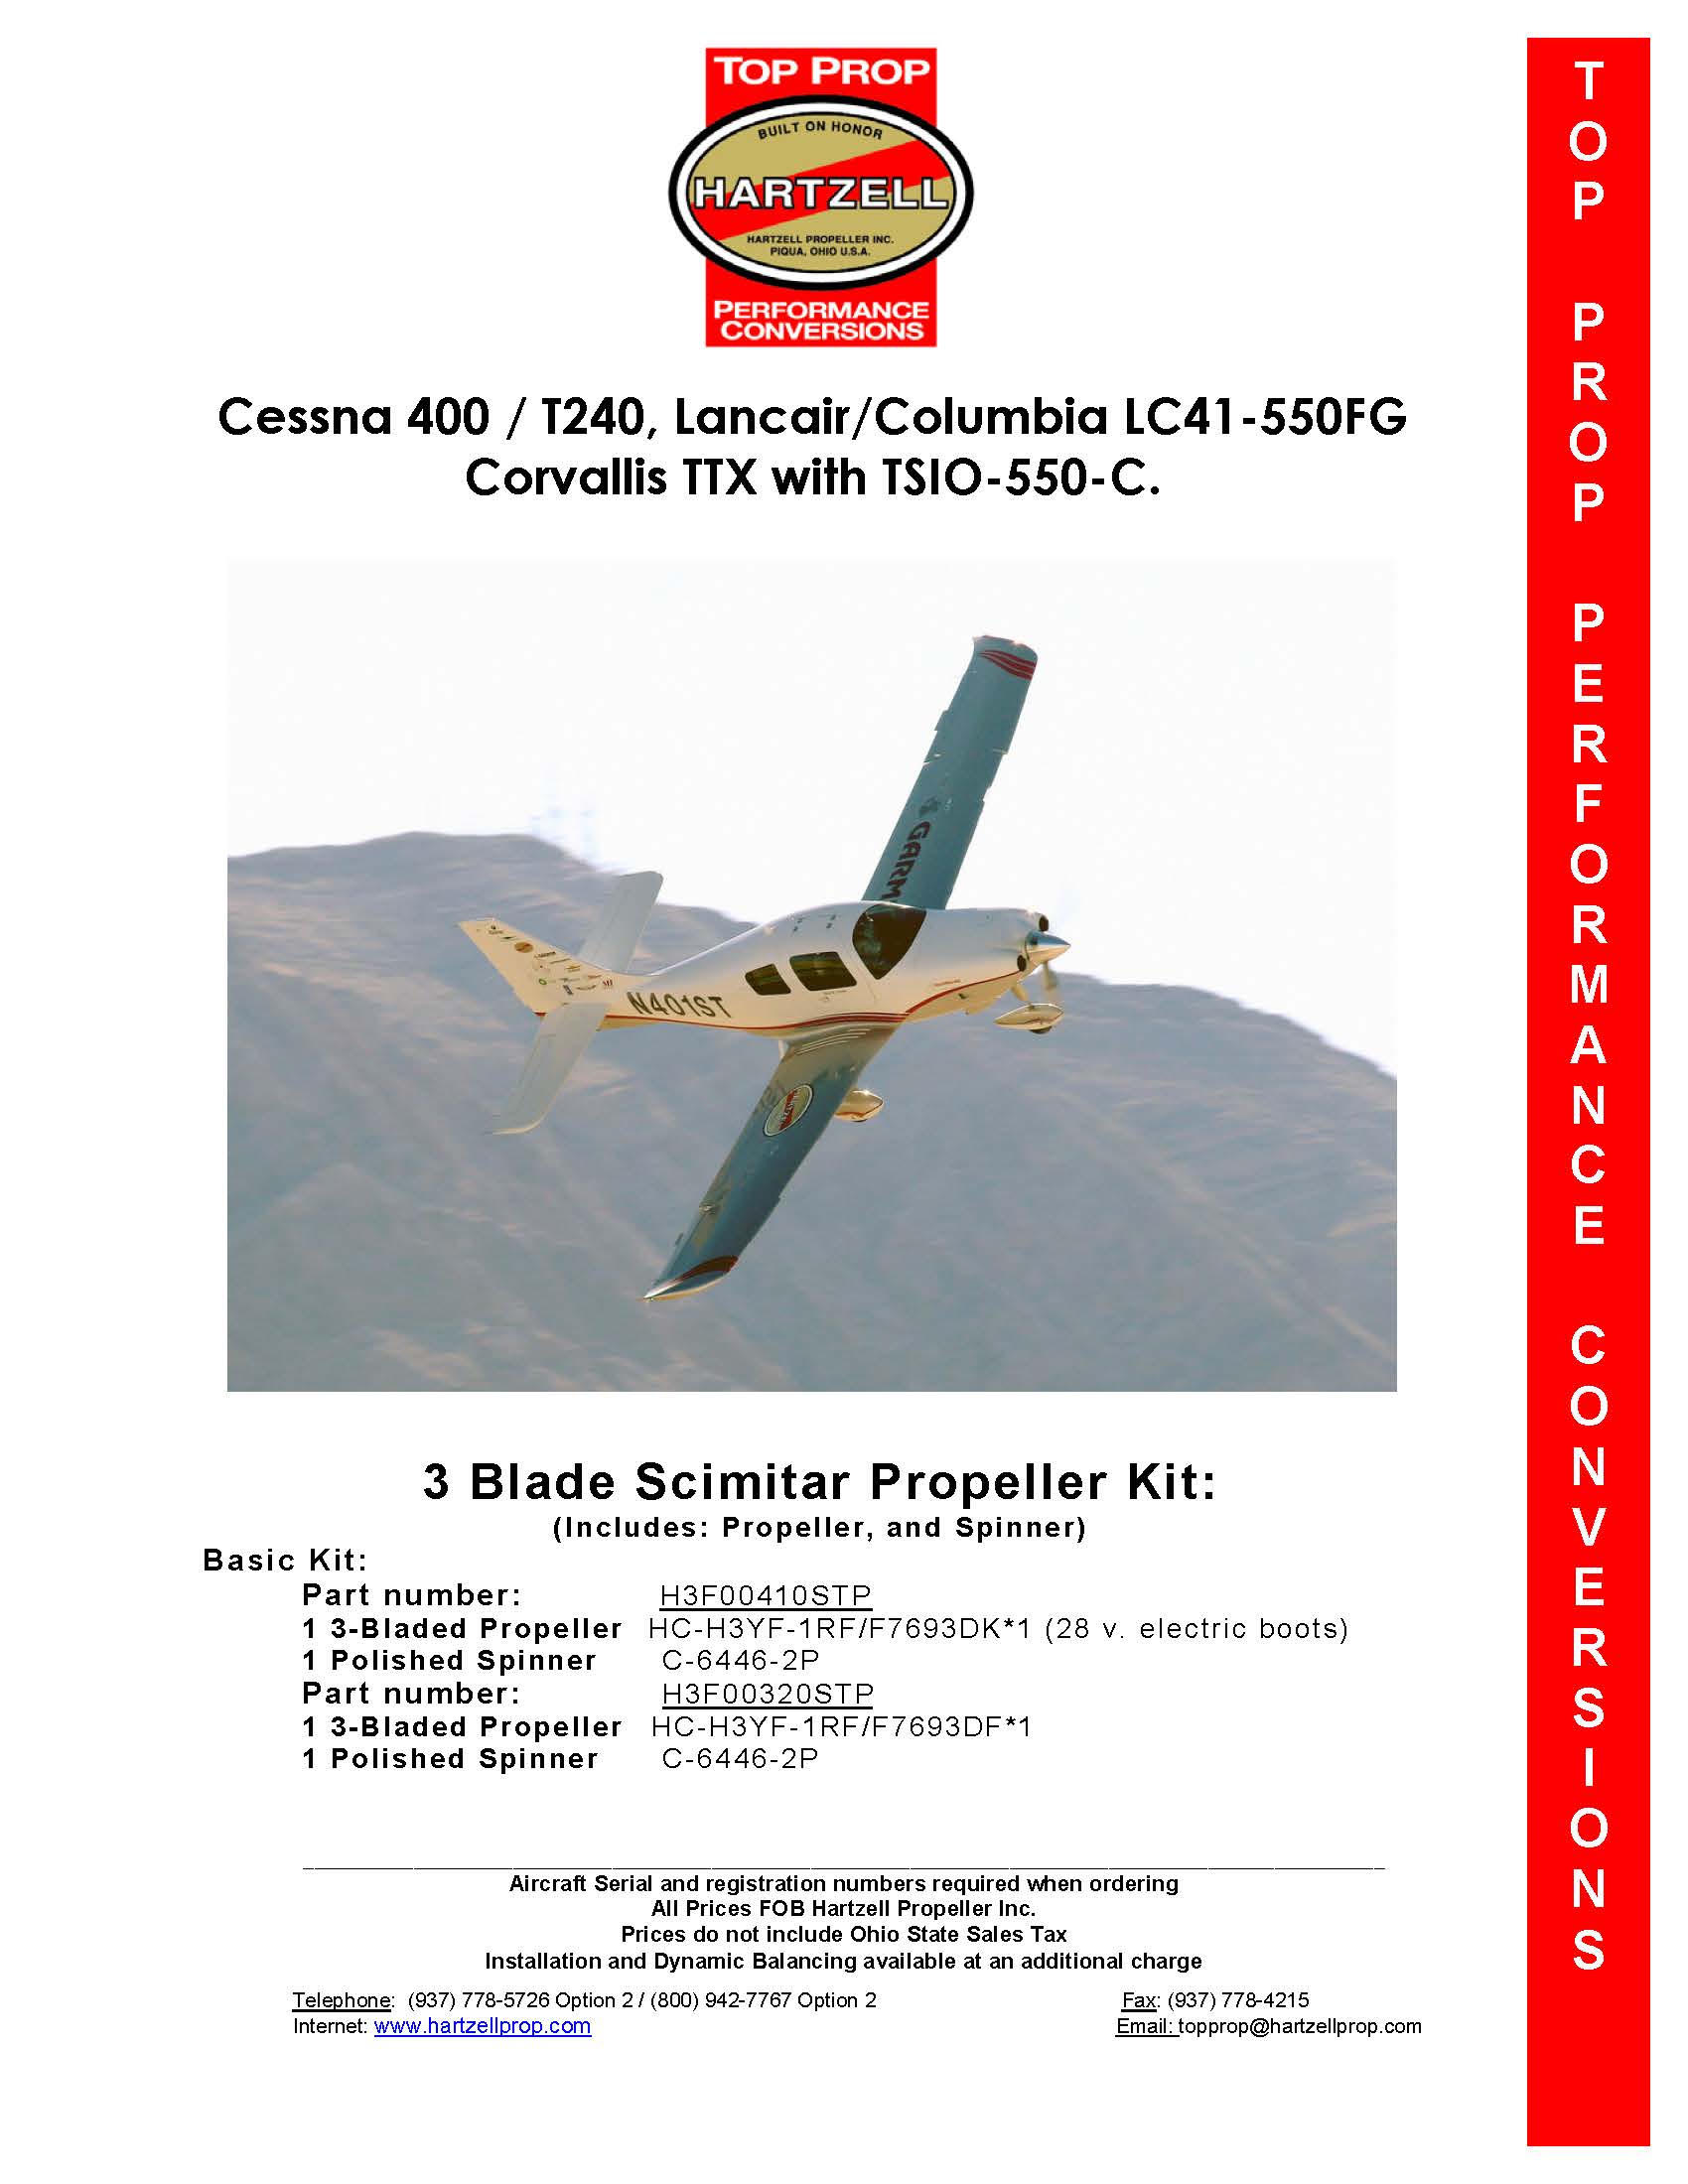 Cessna-400-LANCAIR-COLUMBIA-CORVALLIS-H3F00410STP-H3F00320STP-PAGE-1